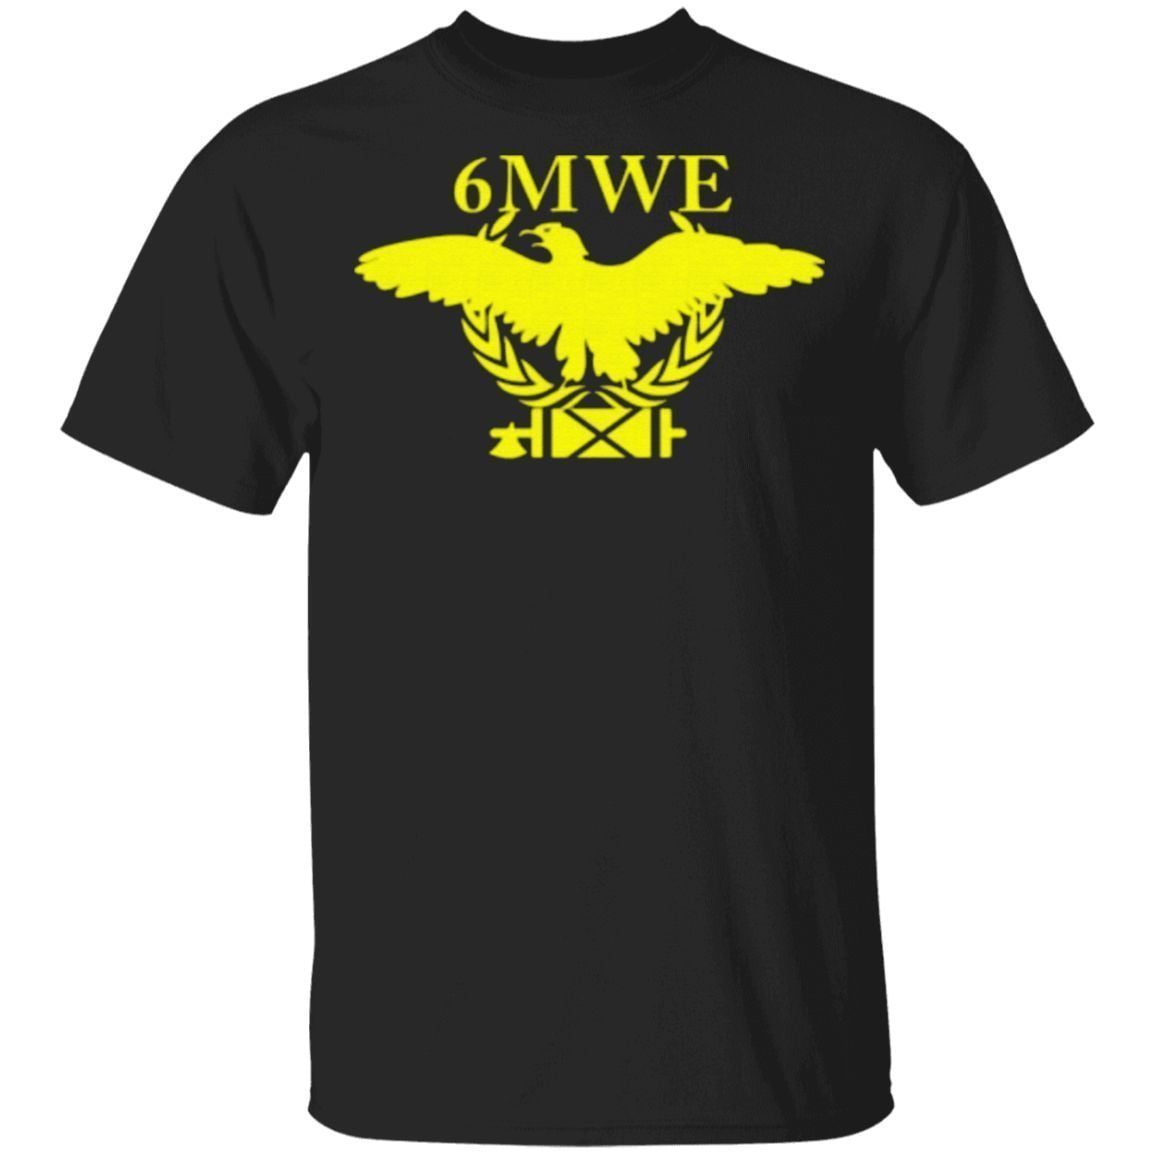 6mwe Meaning shirt